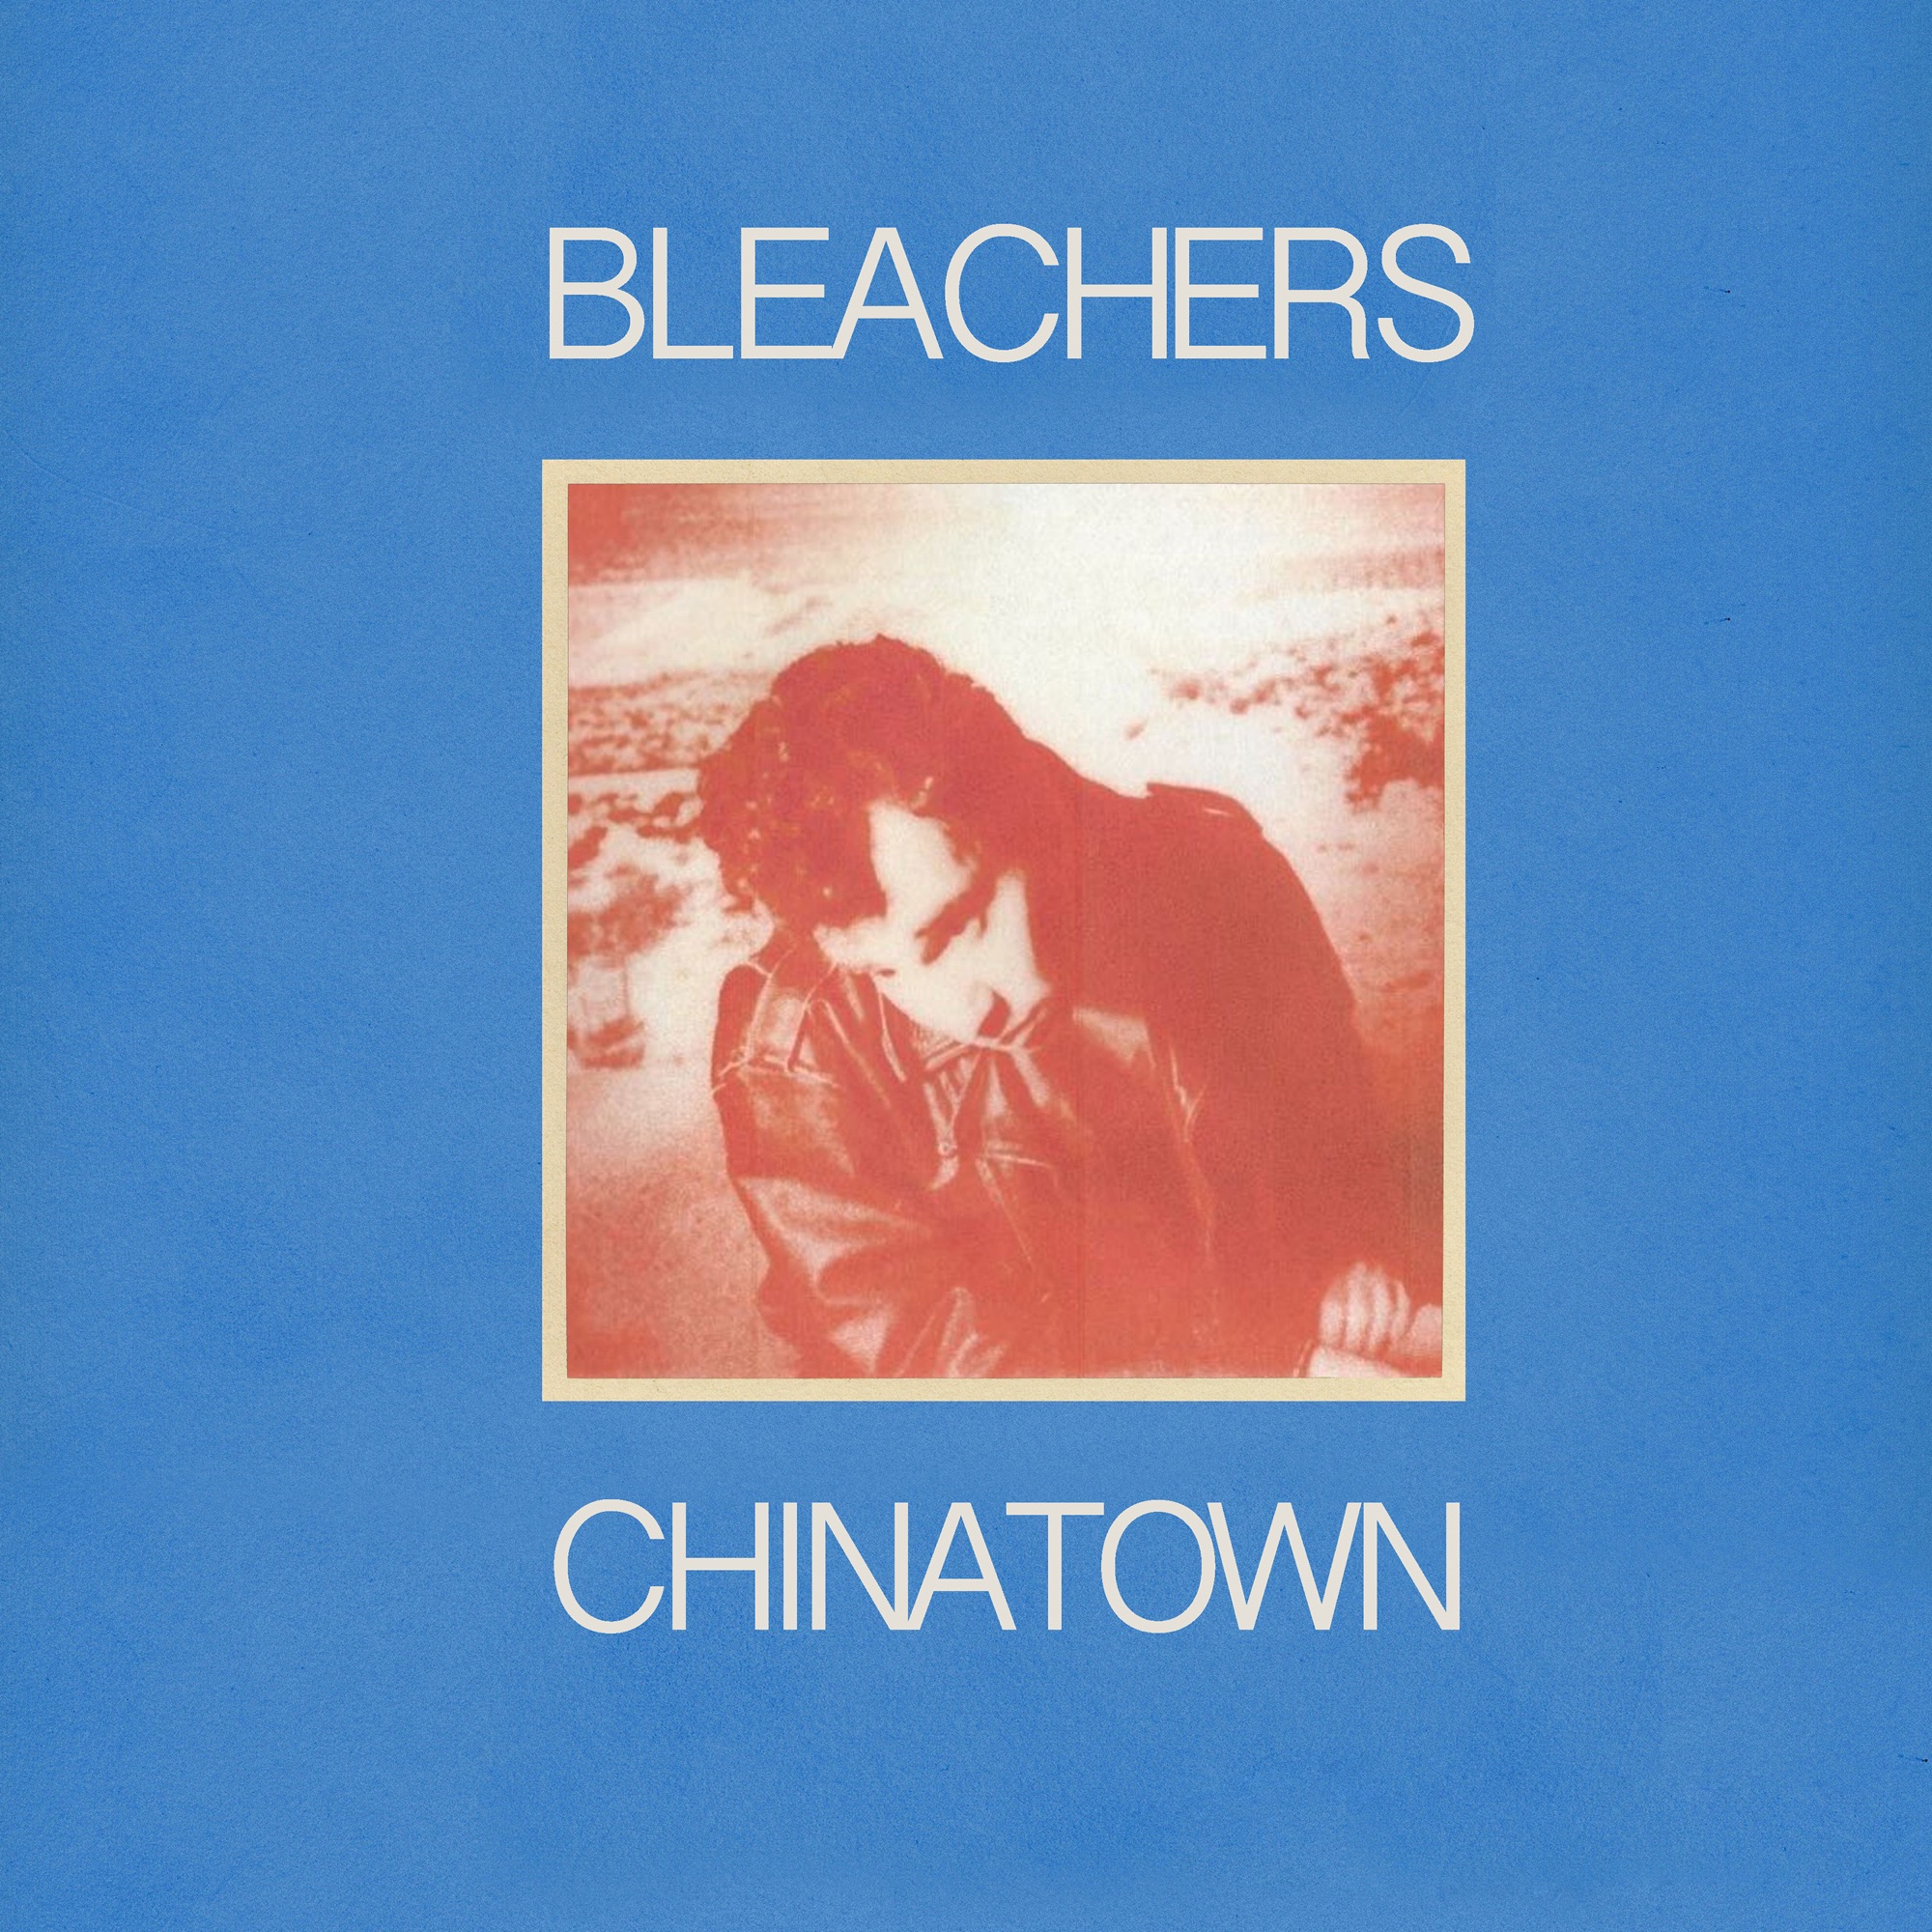 Bleachers - chinatown (feat. Bruce Springsteen) - Single